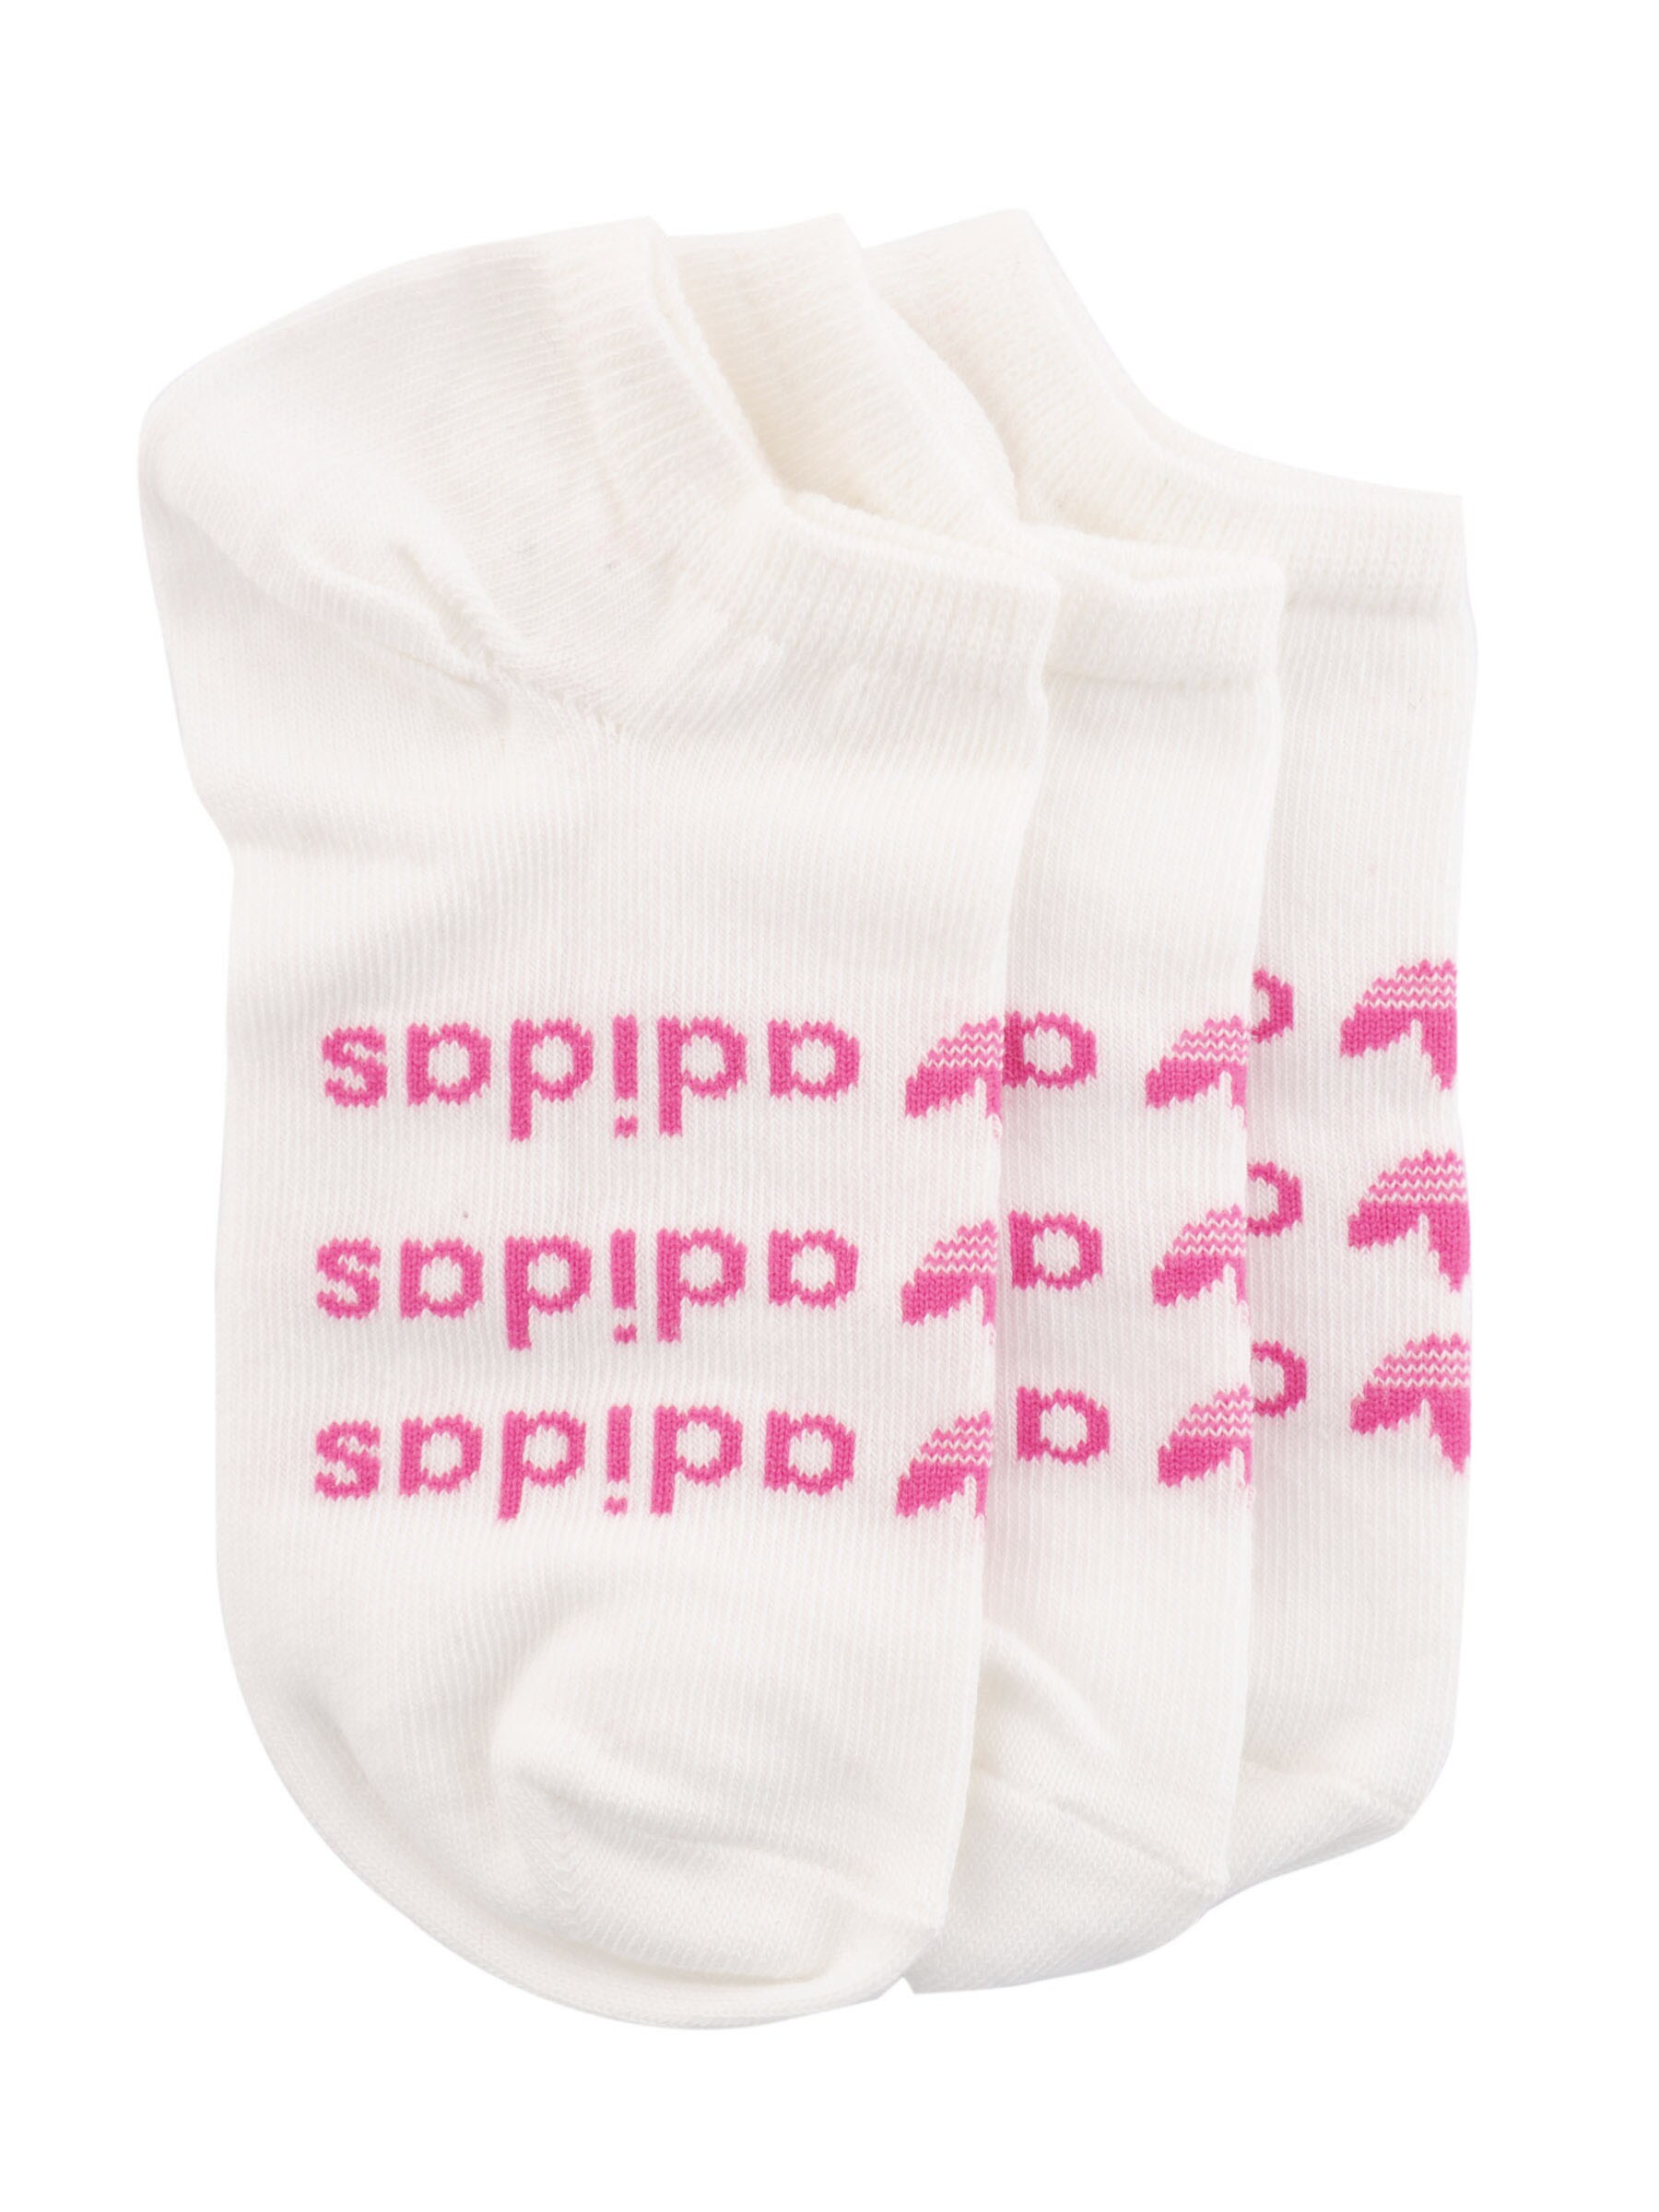 ADIDAS Originals Boys White Pack of 3 Casual Socks